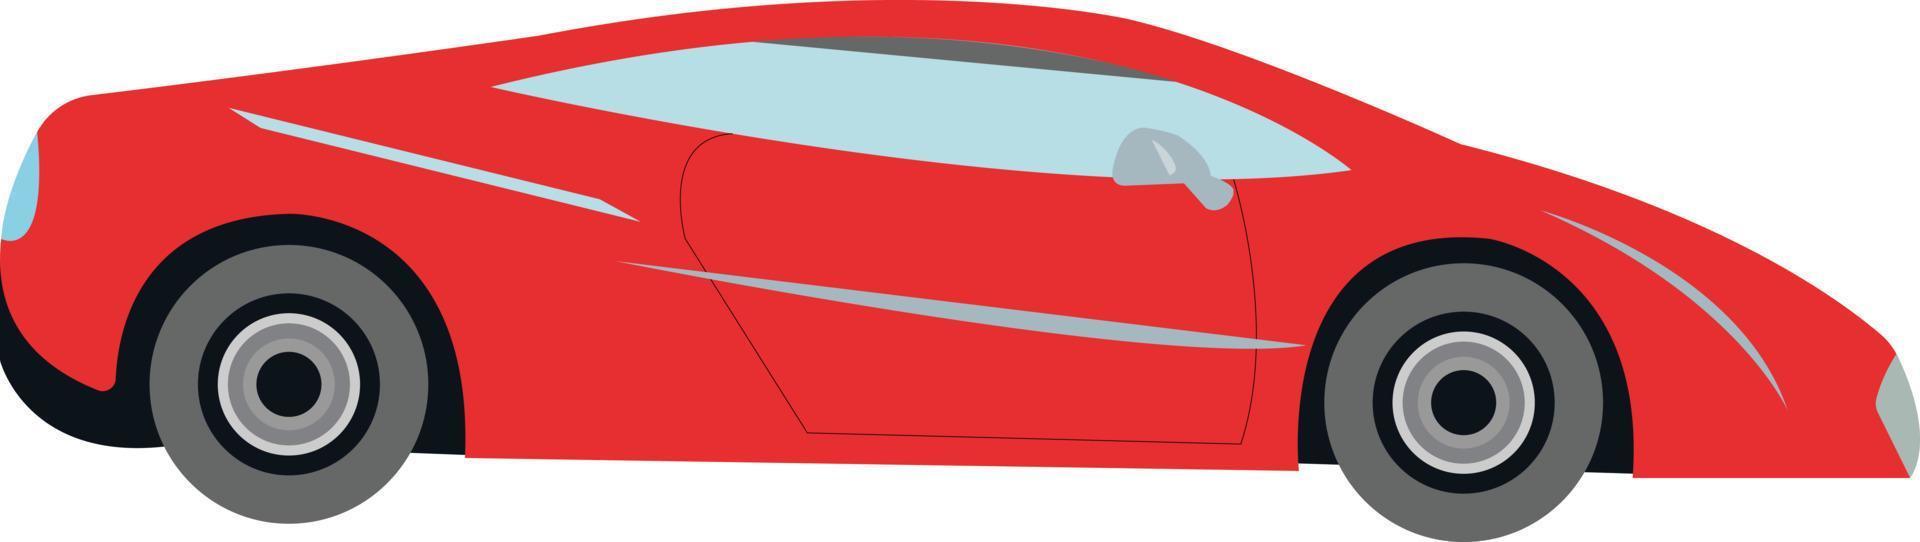 diseño de coche de dibujos animados rojo listo para animación 2d vector